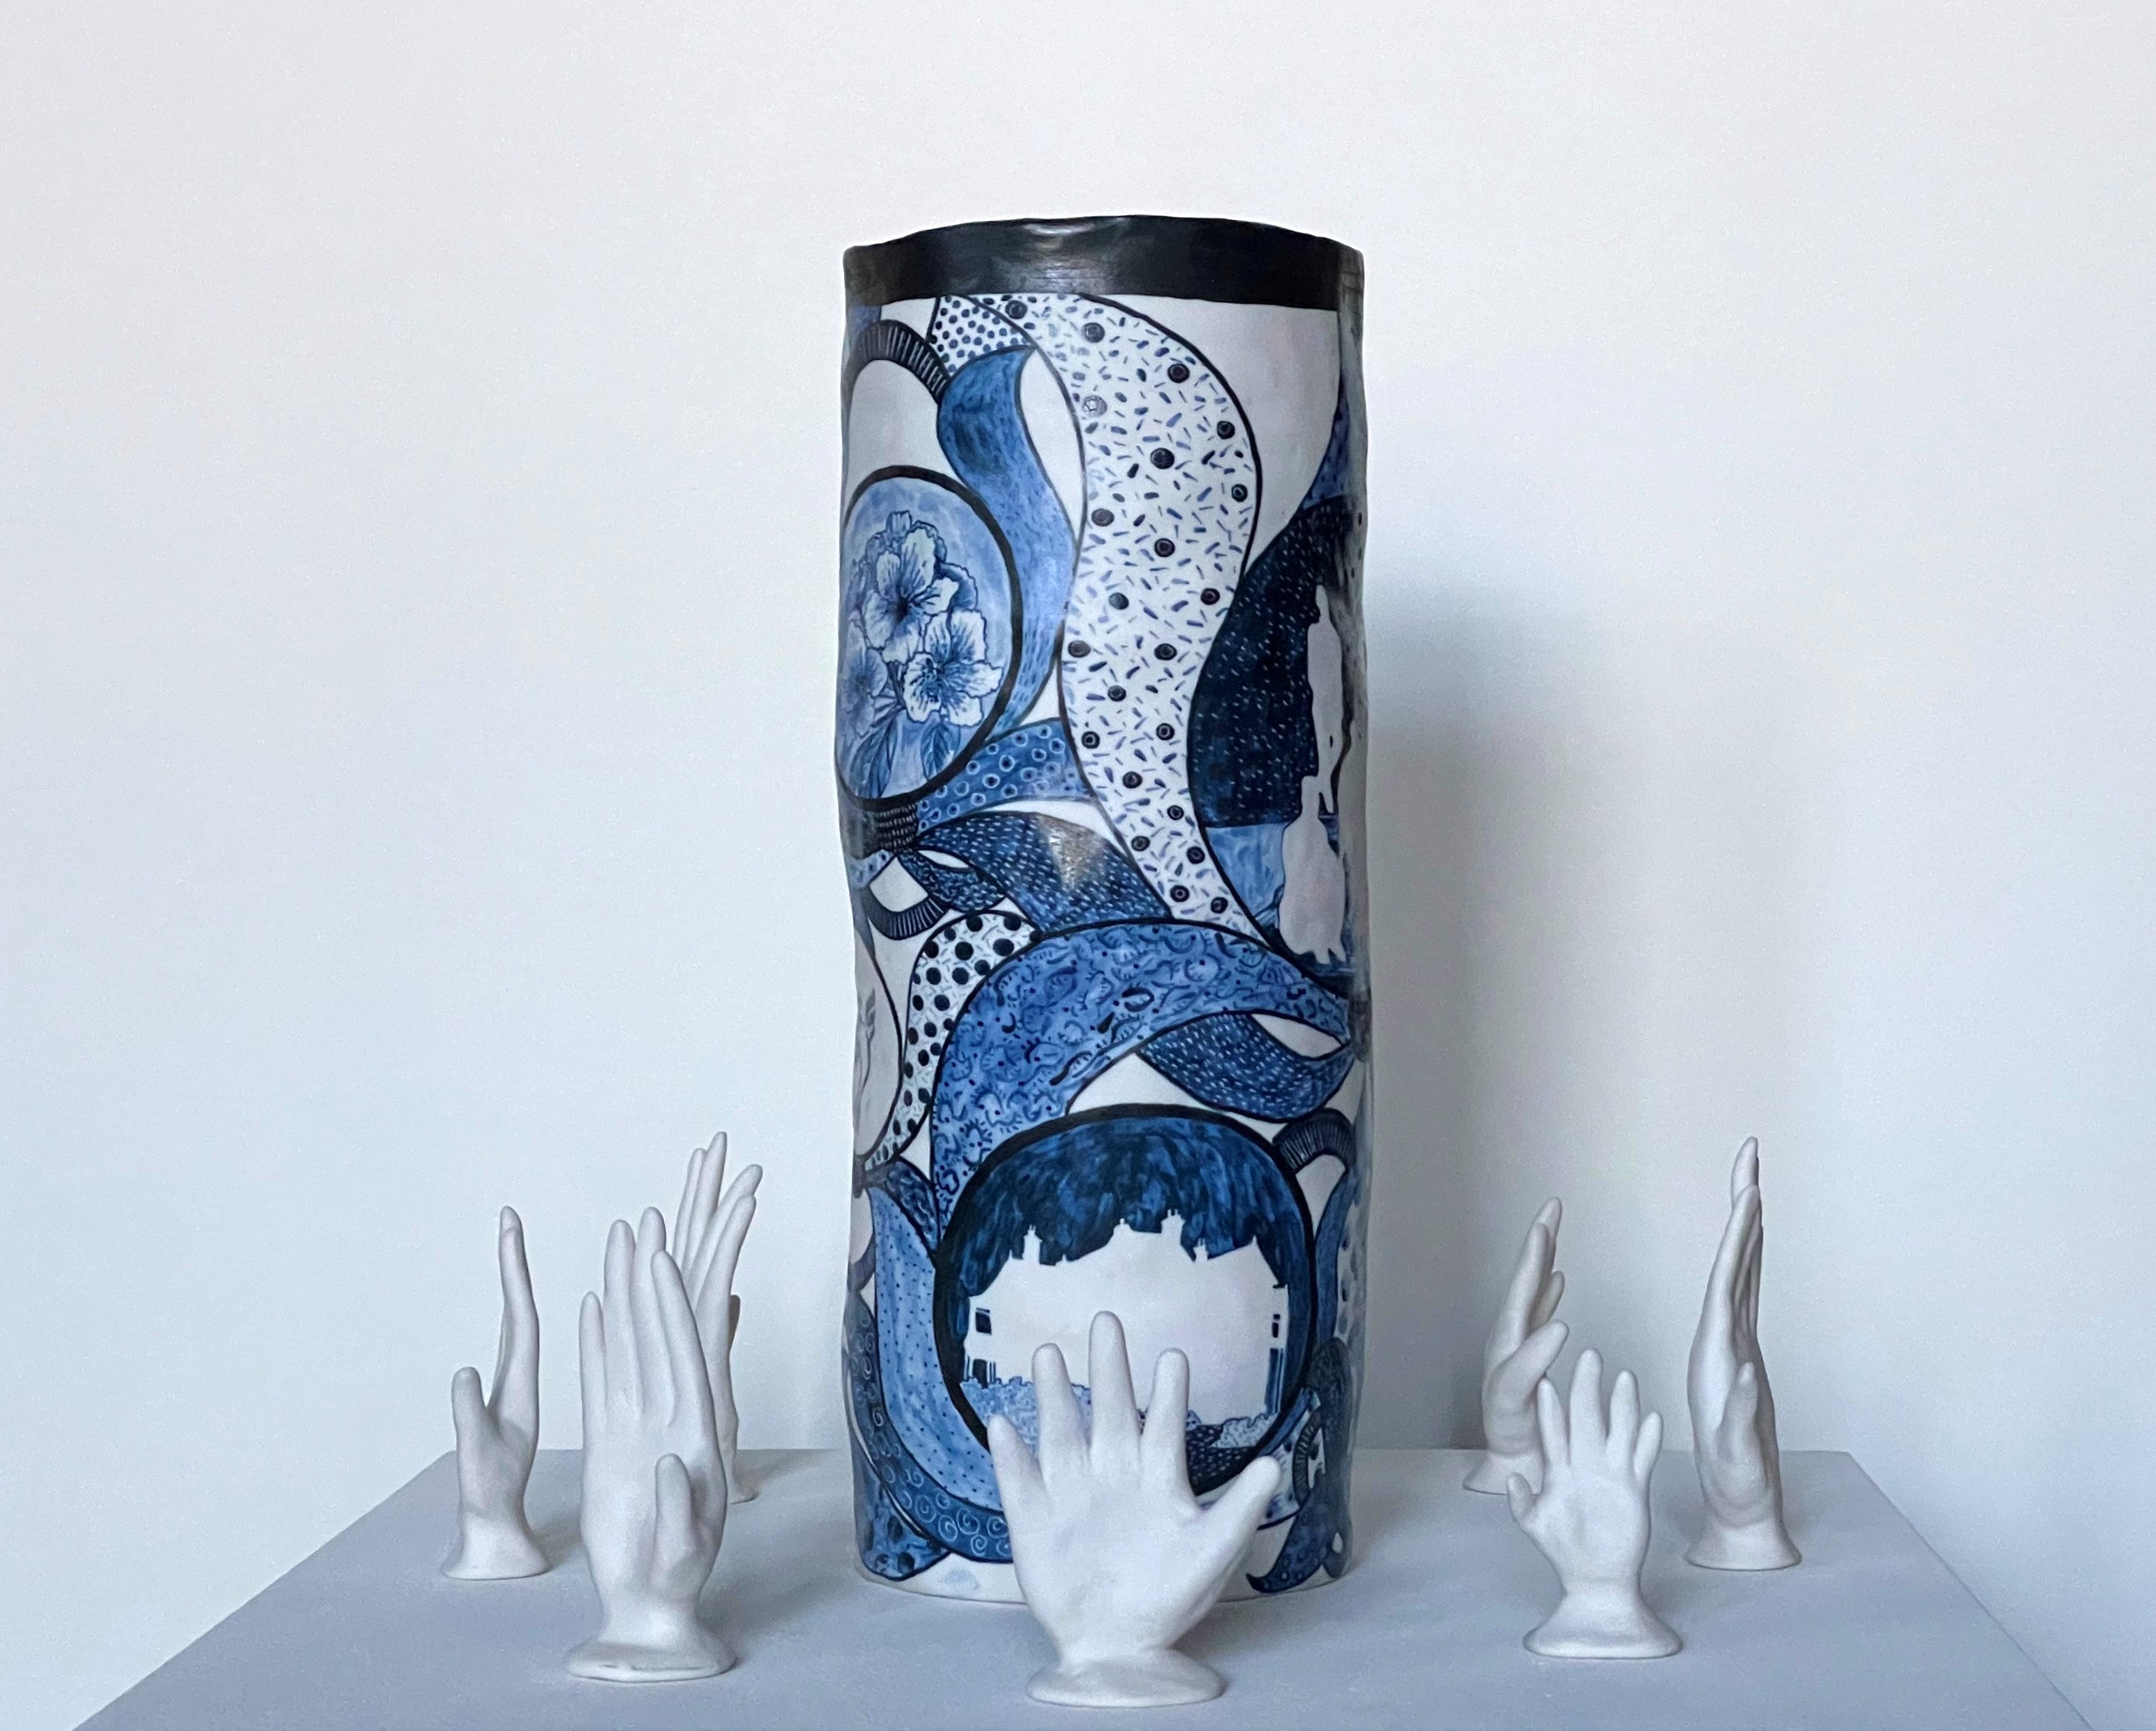 A patterned blue, black and white sculptural artwork